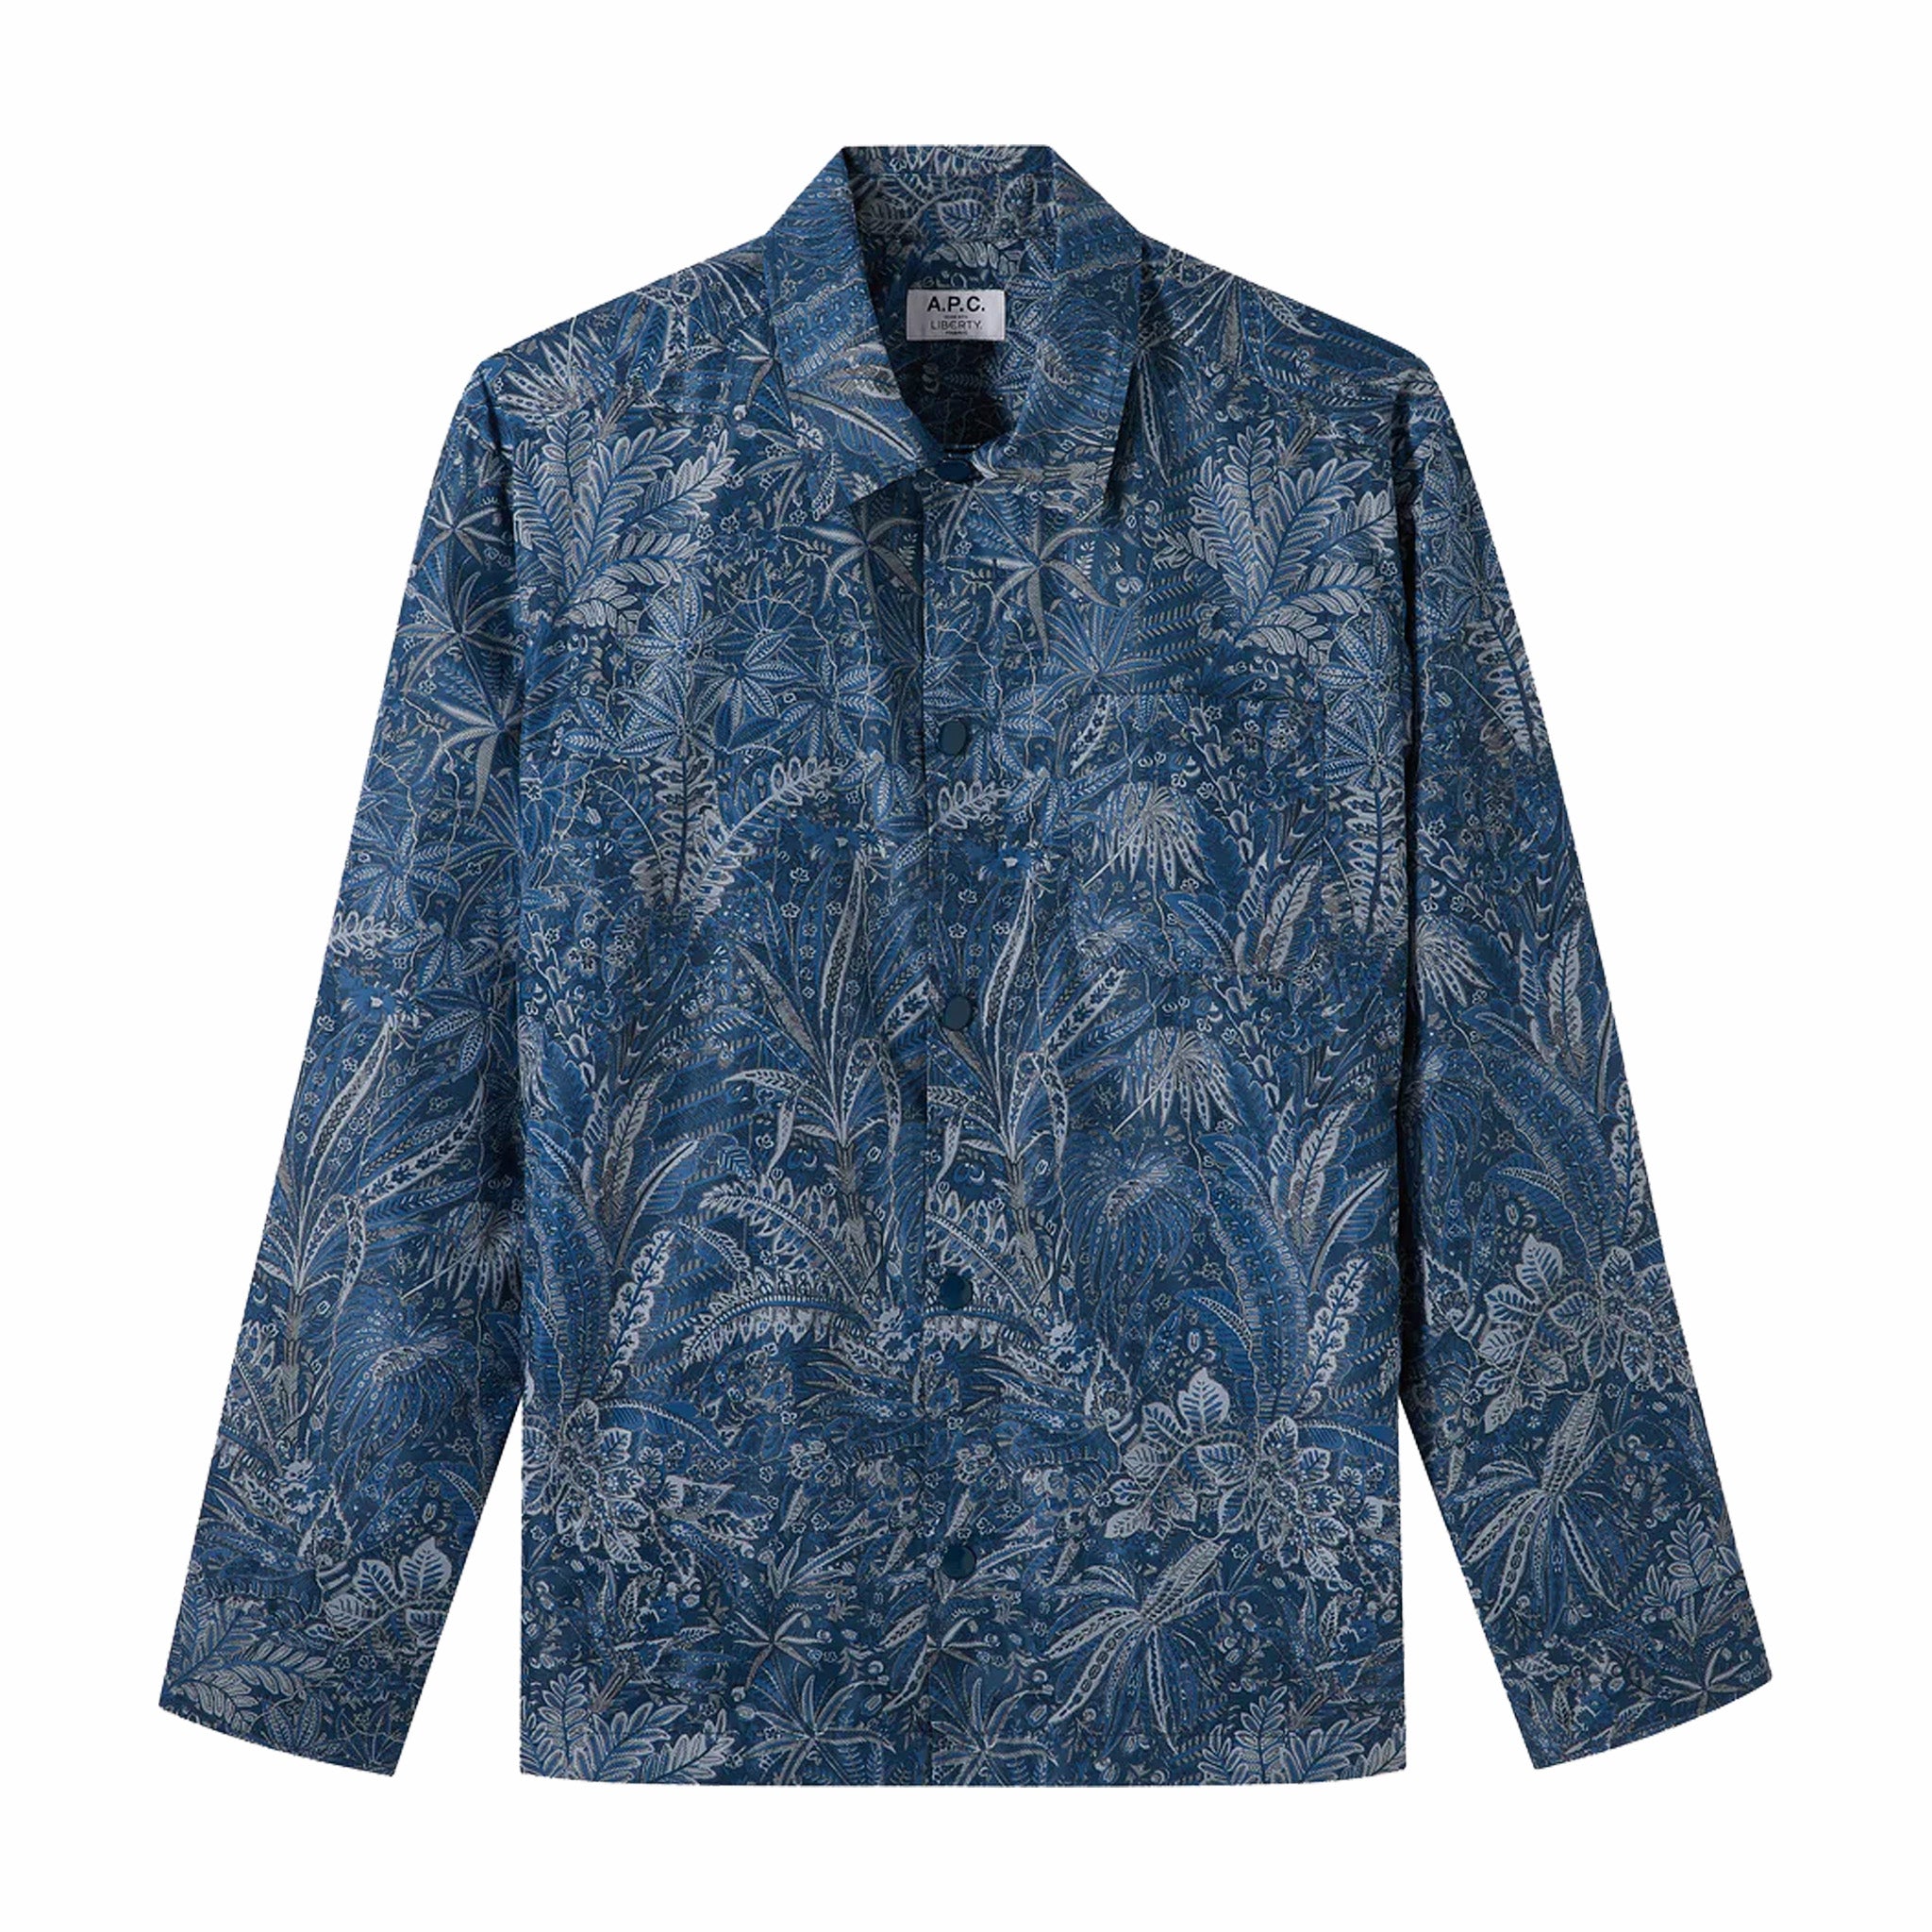 A.P.C. Liberty Exotic Print Watson Jacket (Blue) - August Shop